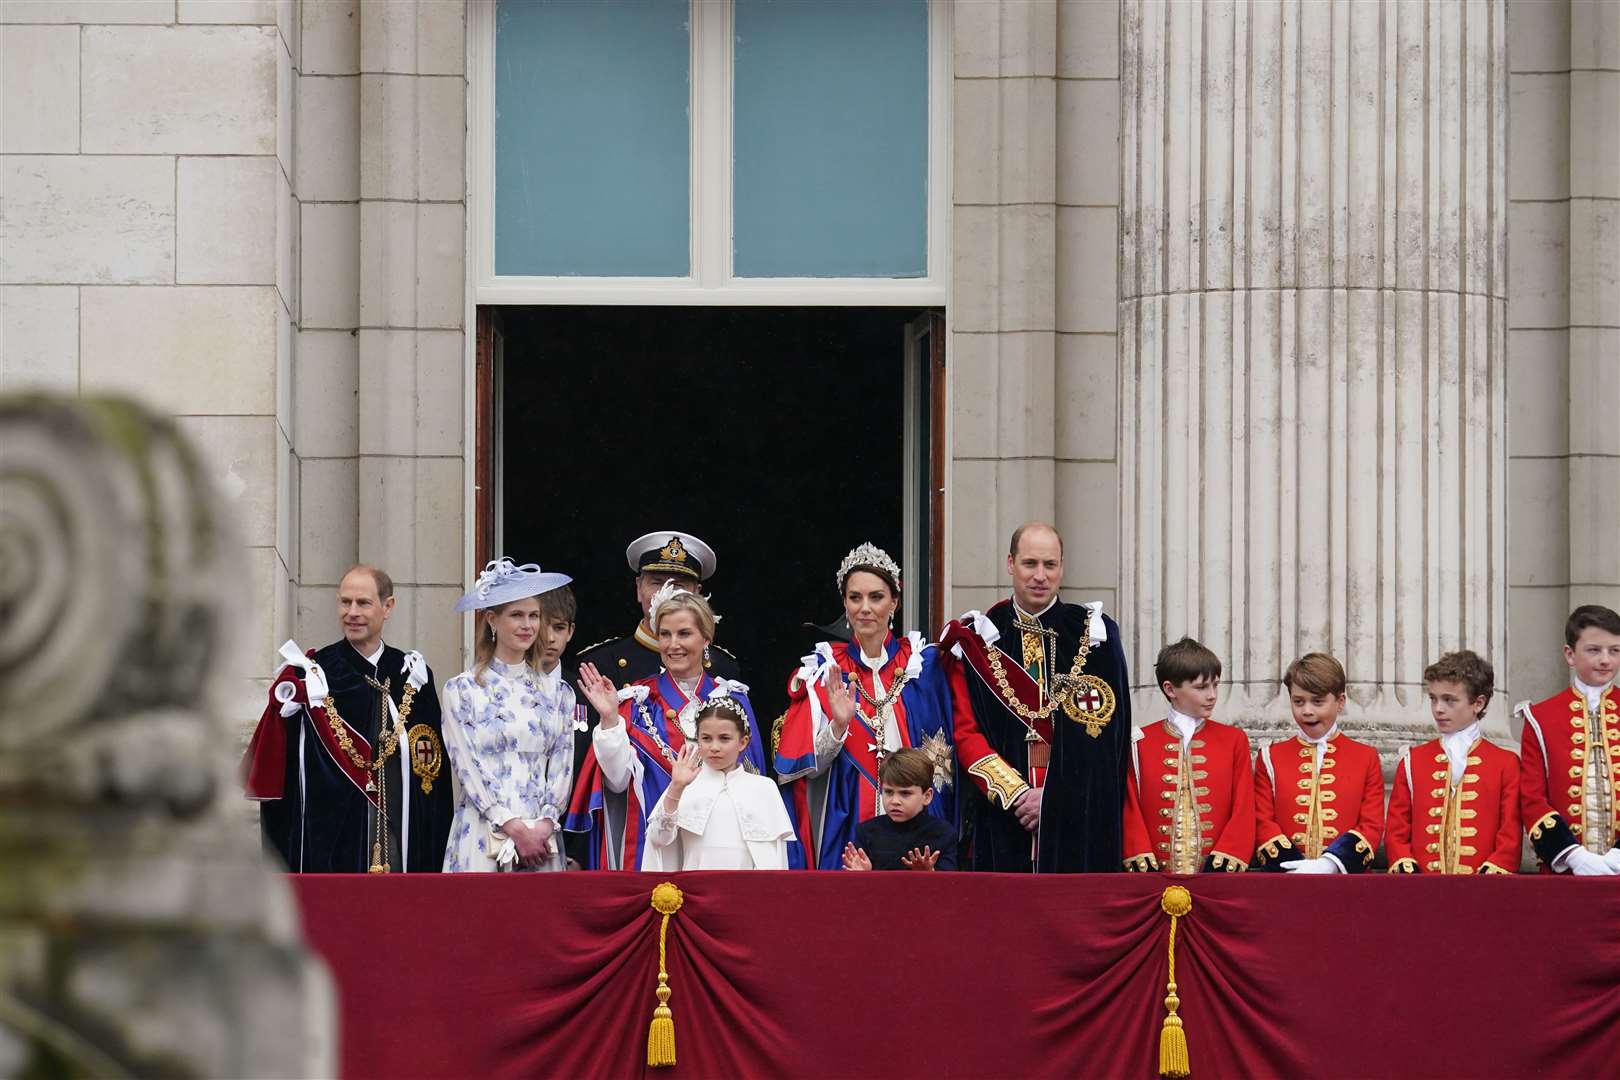 From left: the Duke of Edinburgh, Lady Louise Windsor, the Duchess of Edinburgh, Princess Charlotte, the Princess of Wales, Prince Louis, the Prince of Wales and Prince George on the balcony (Owen Humphreys/PA)